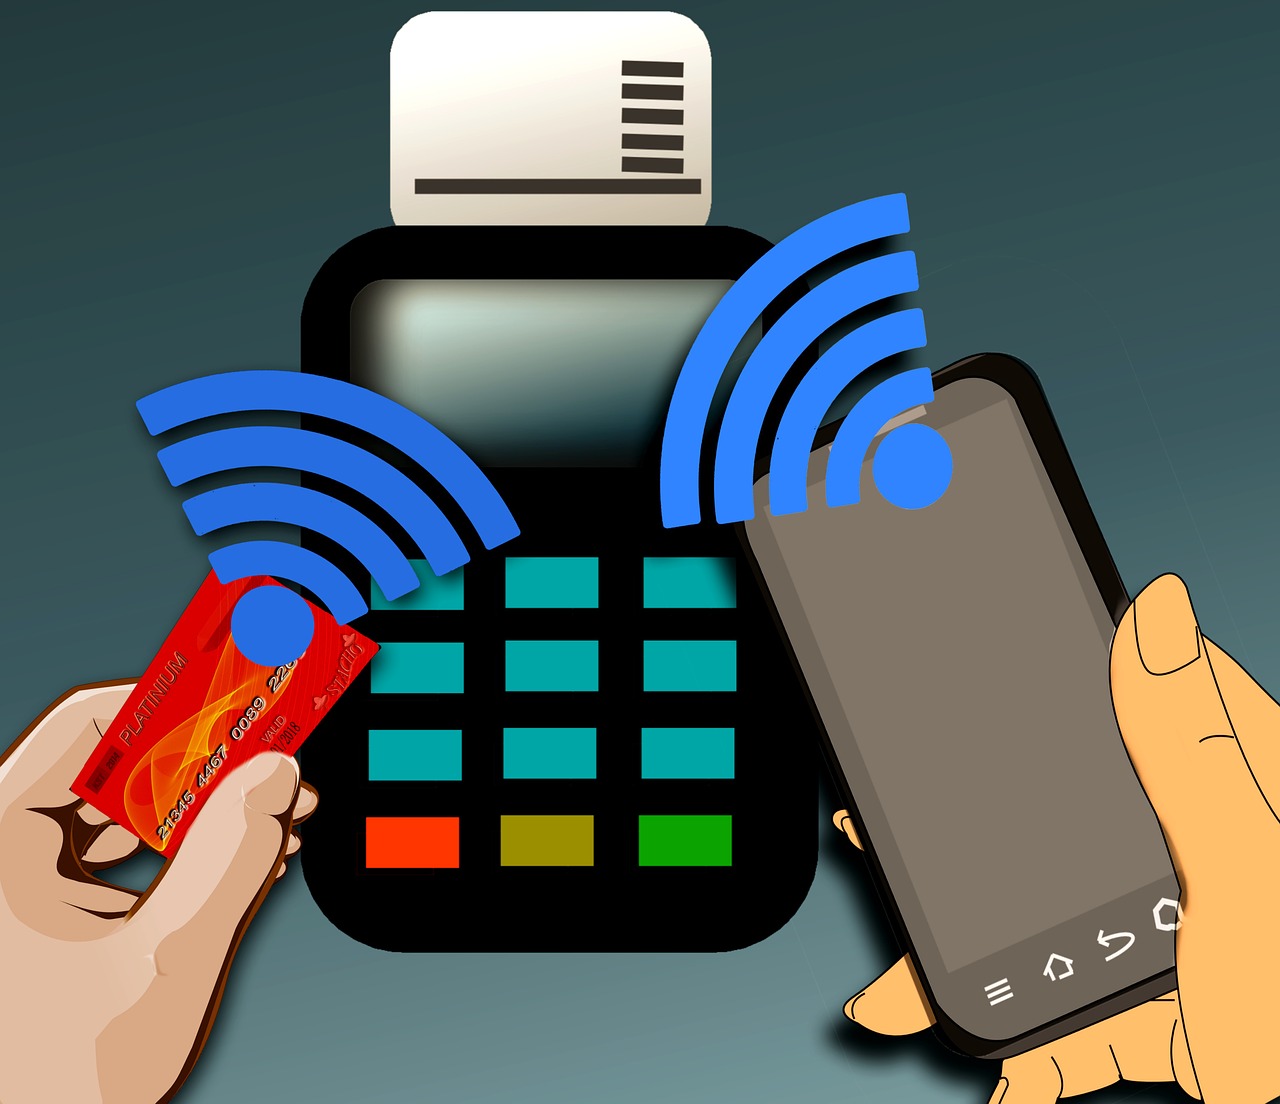 NFC payment